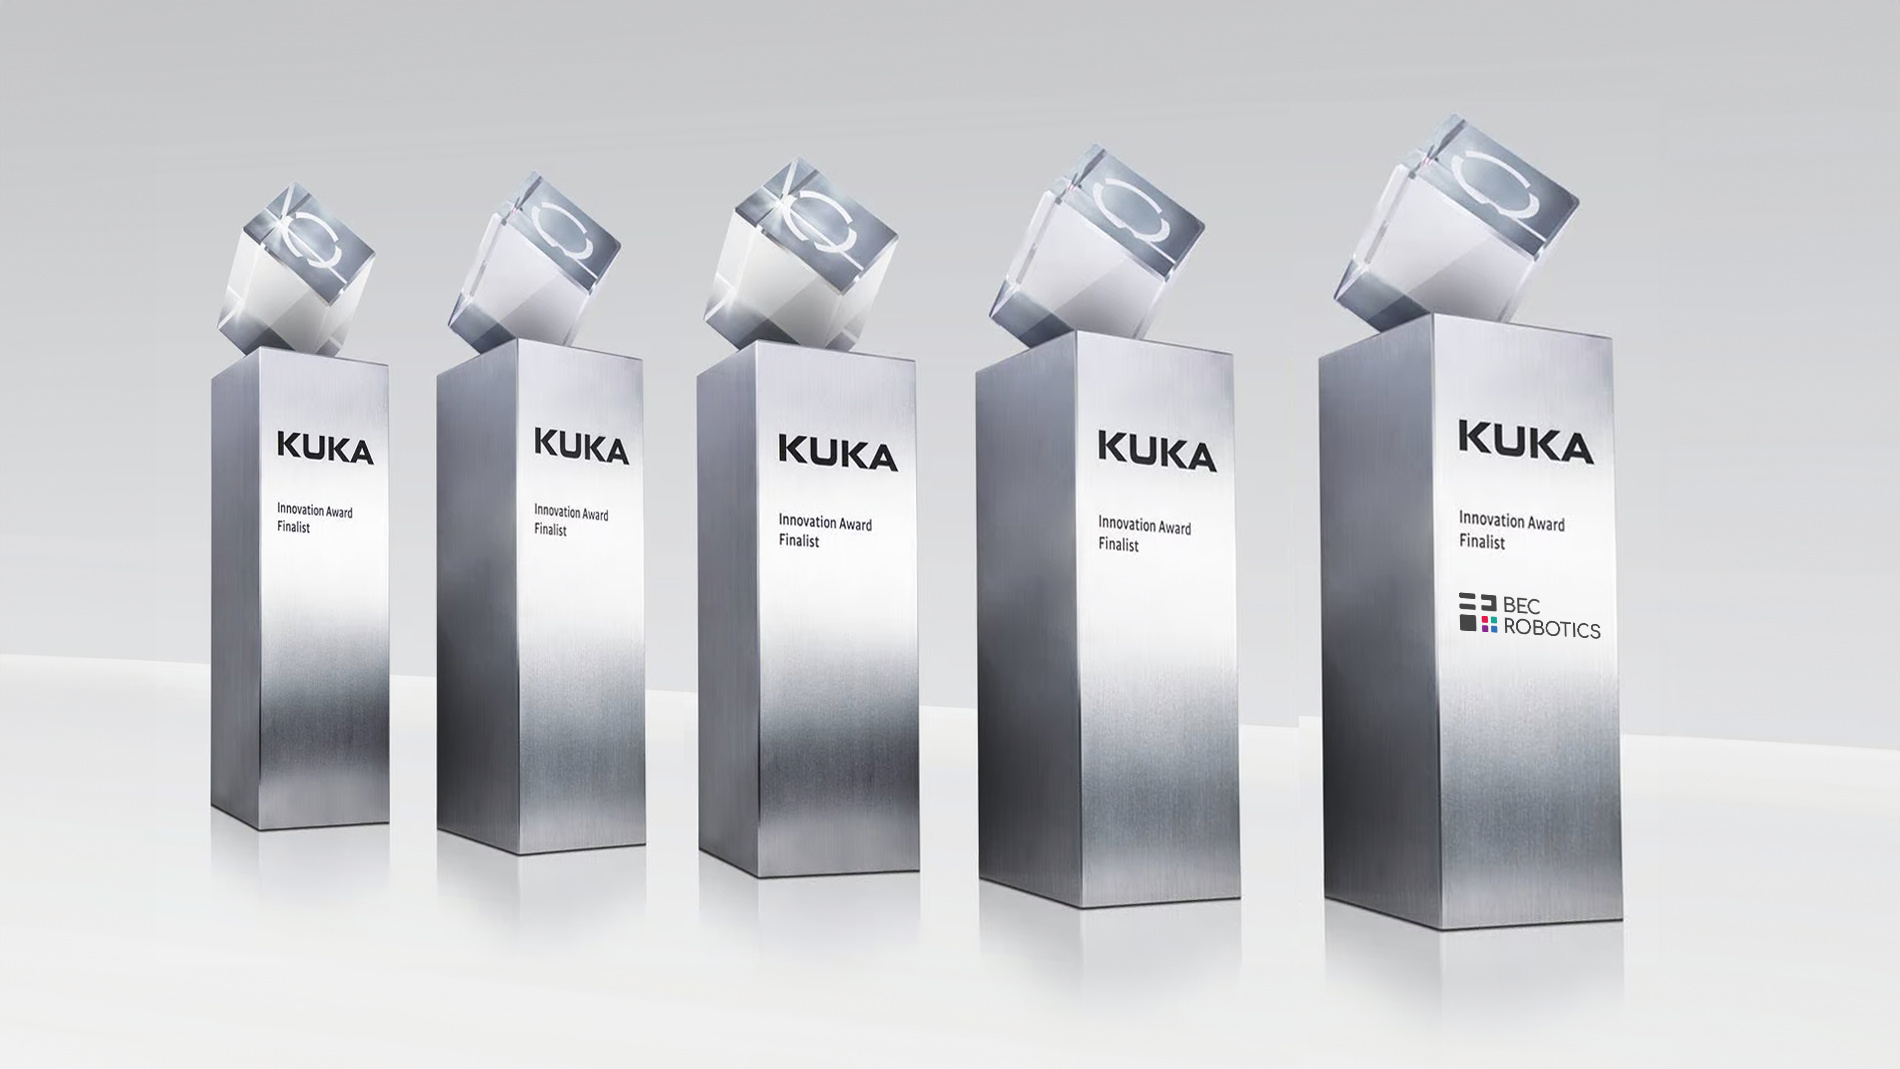 KUKA Innovation Award Finalist